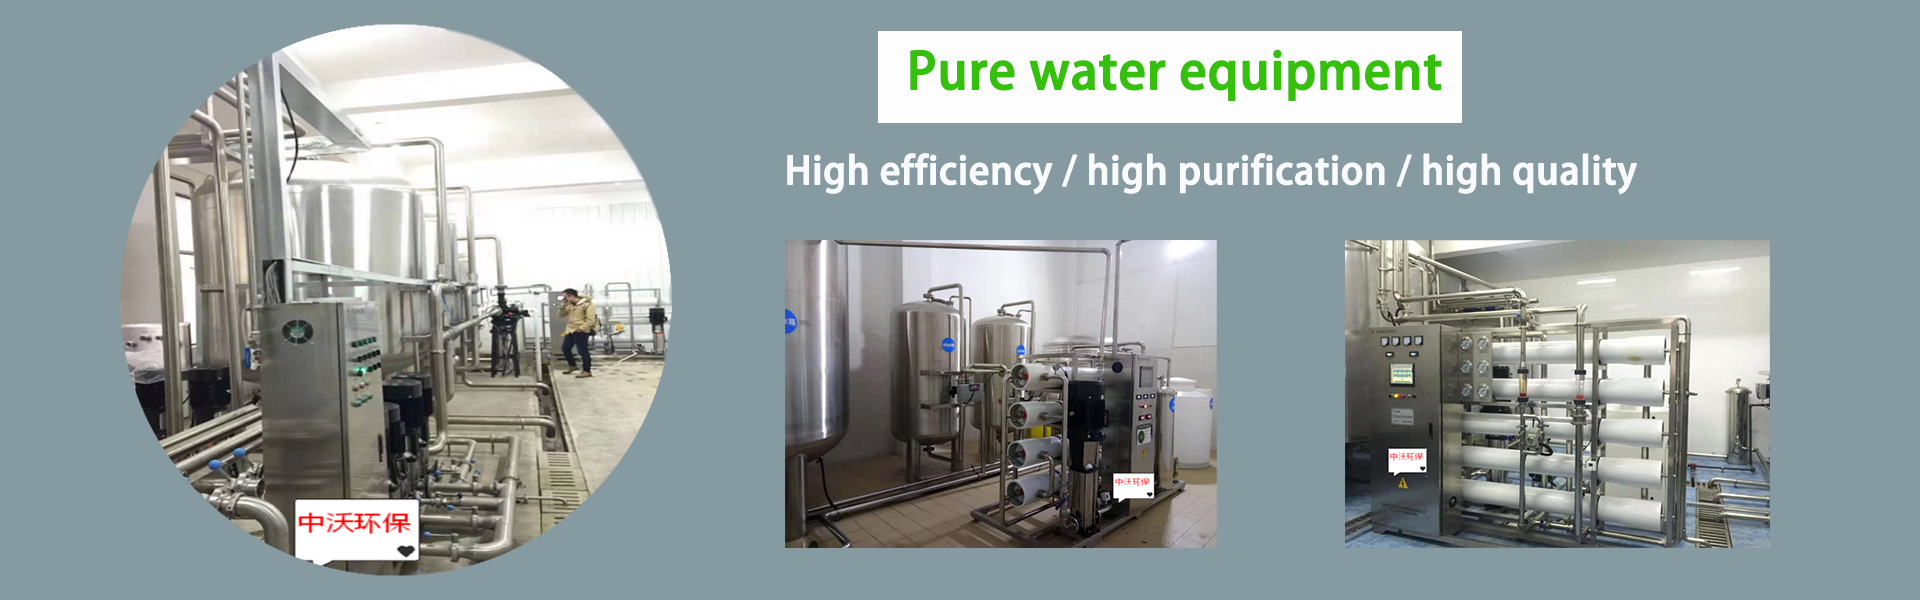 waterbehandeling apparatuur, waterzuivering apparatuur, milieubescherming apparatuur,Foshan zhongwo Environmental Protection Technology Co Ltd.